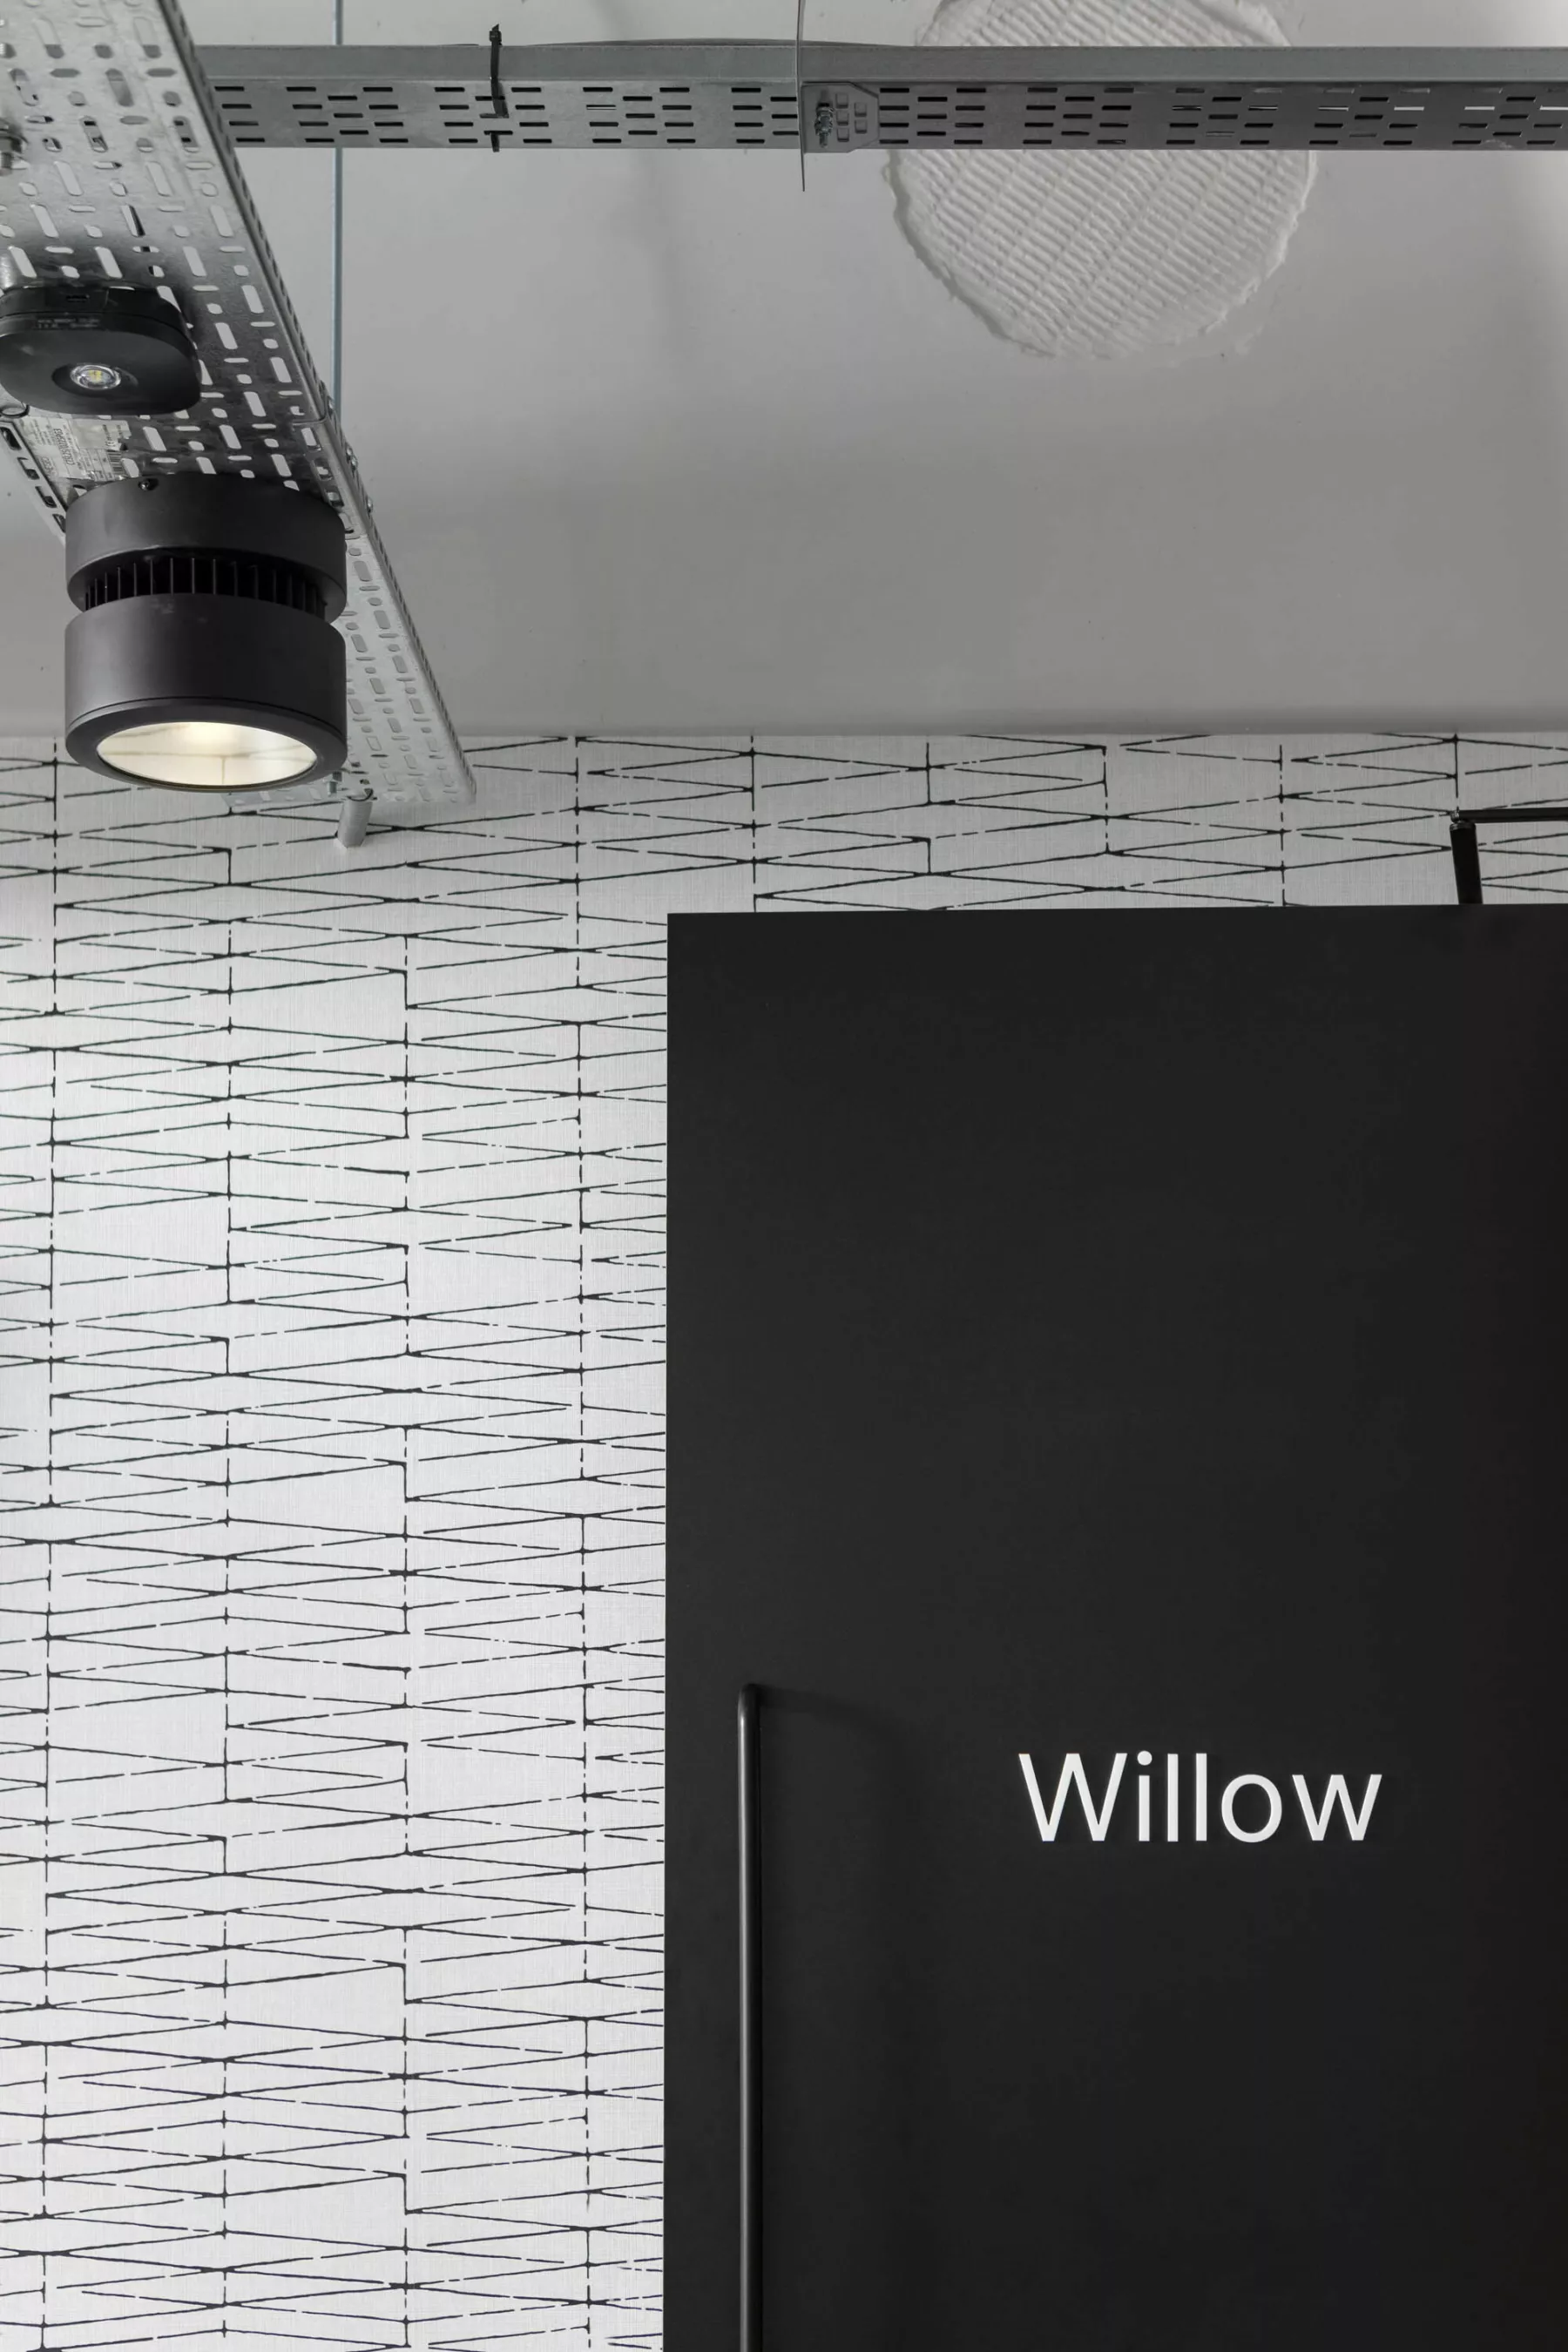 Detail of lighting and a meeting room door at Changeworks refurbished offices, Edinburgh. "Willow" on black door in white type.